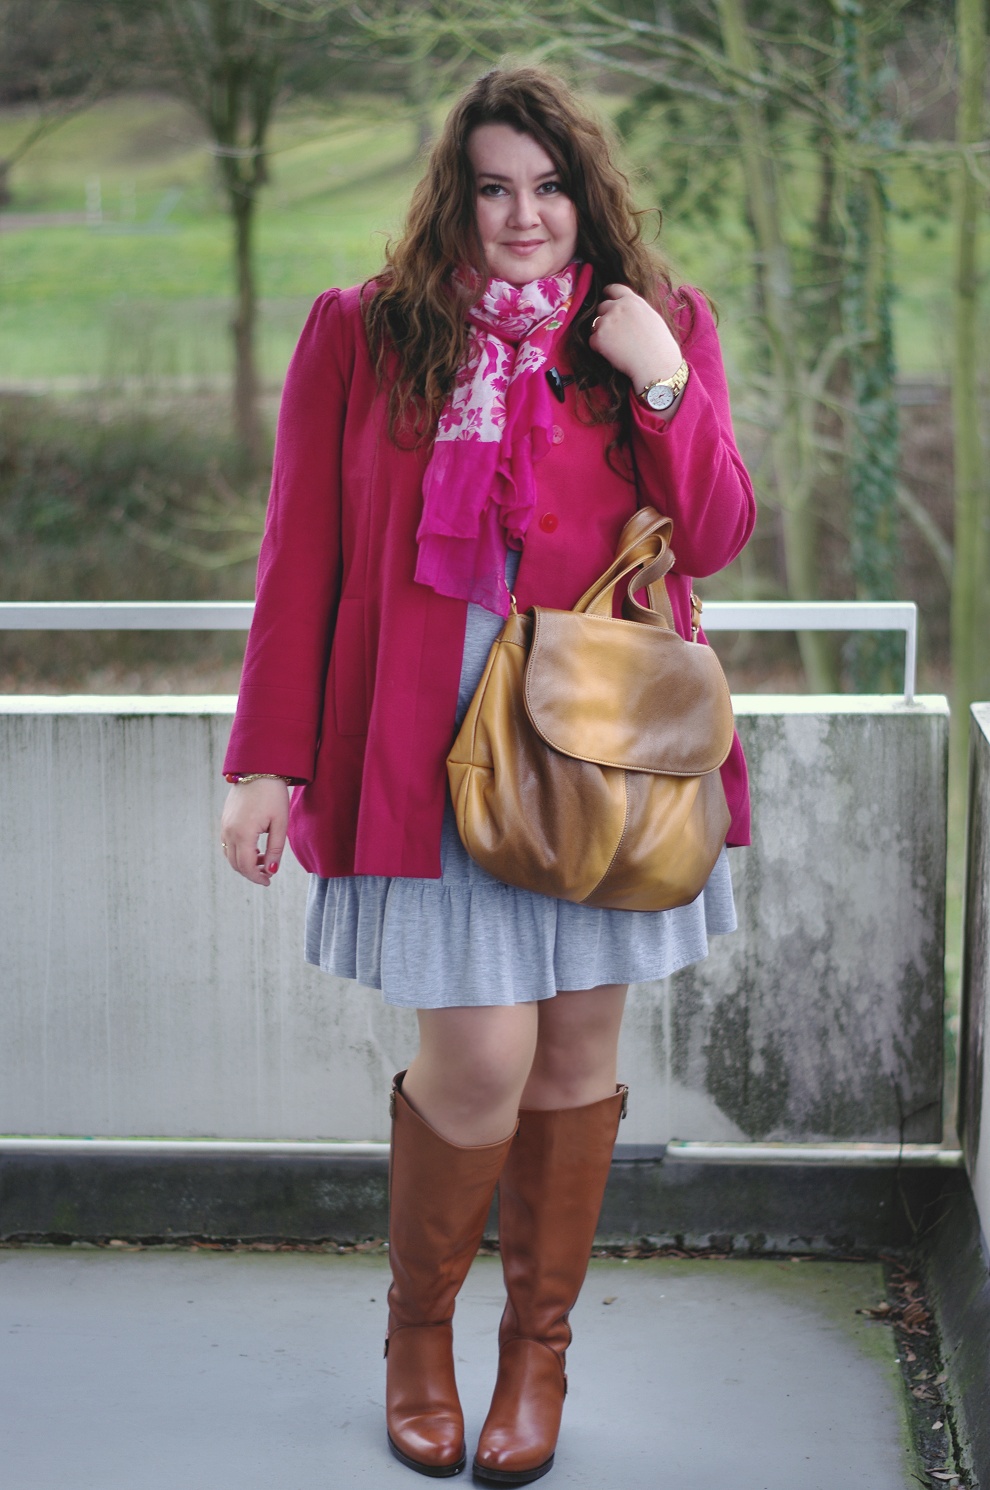 GroÃŸe GrÃ¶ÃŸen Plus Size Fashion Blog F&F pink duffle coat grey dress jilsen boots